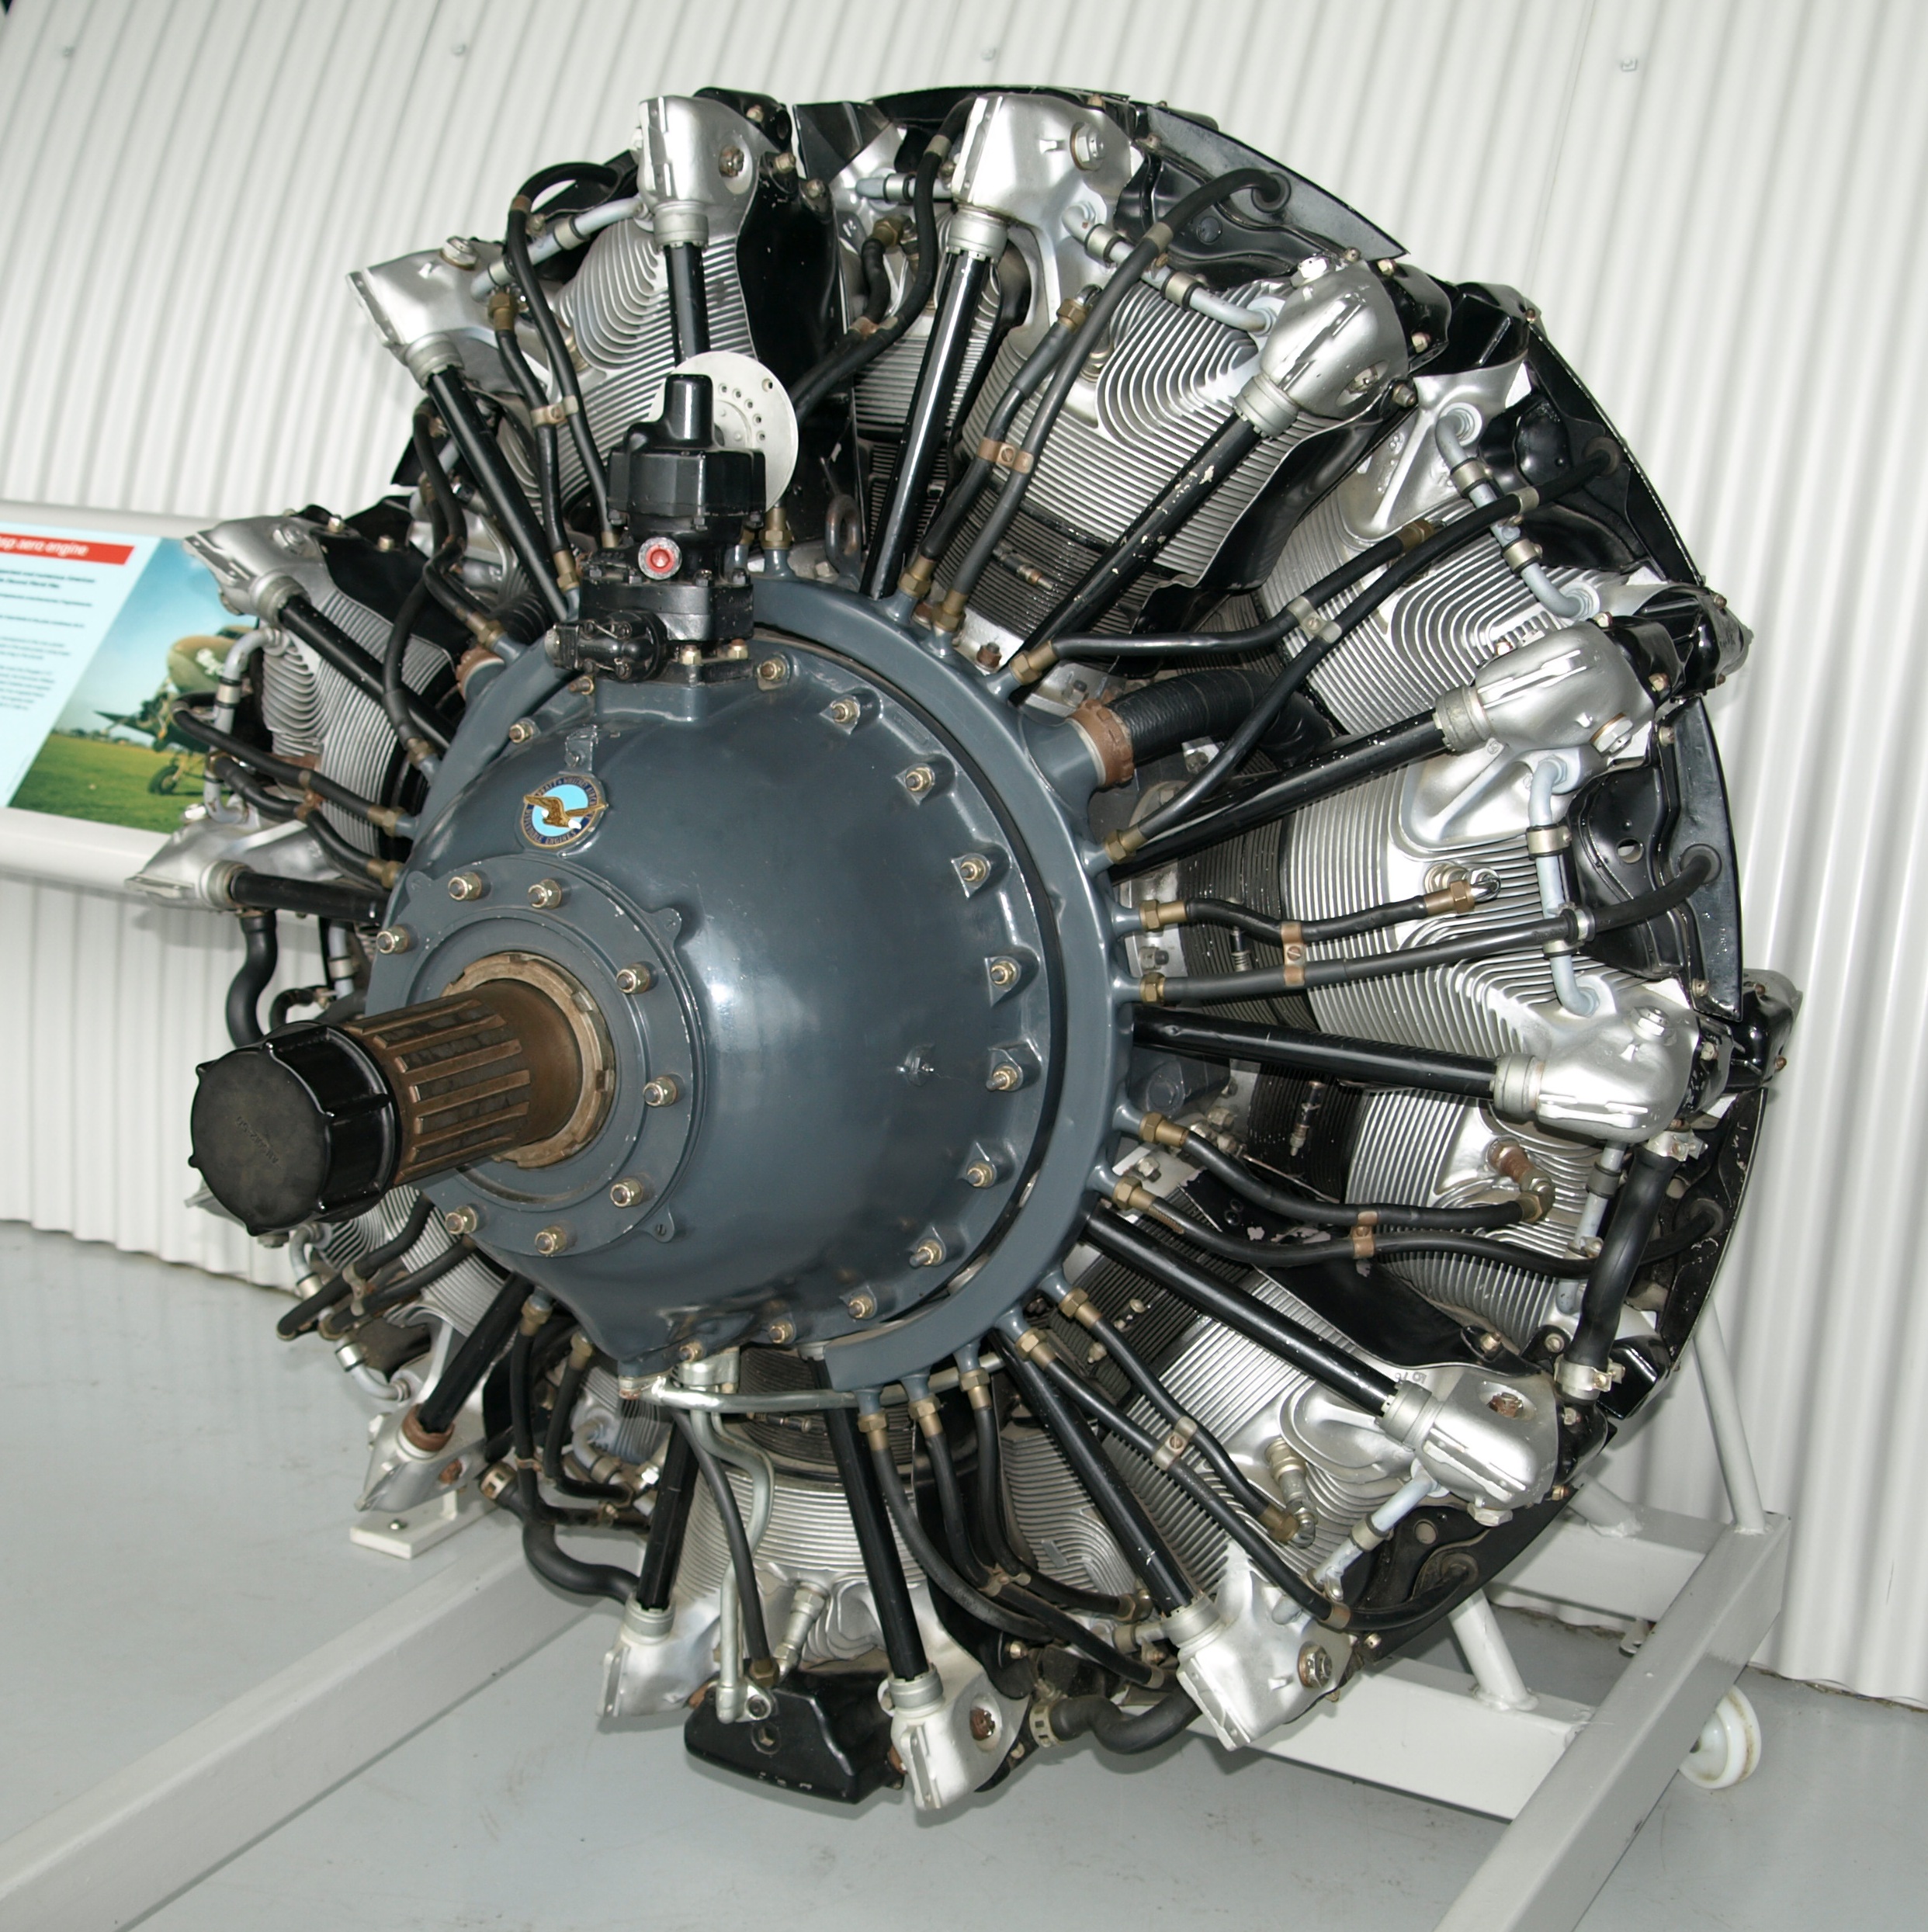 Pratt & Whitney R-1830 radial aero engine